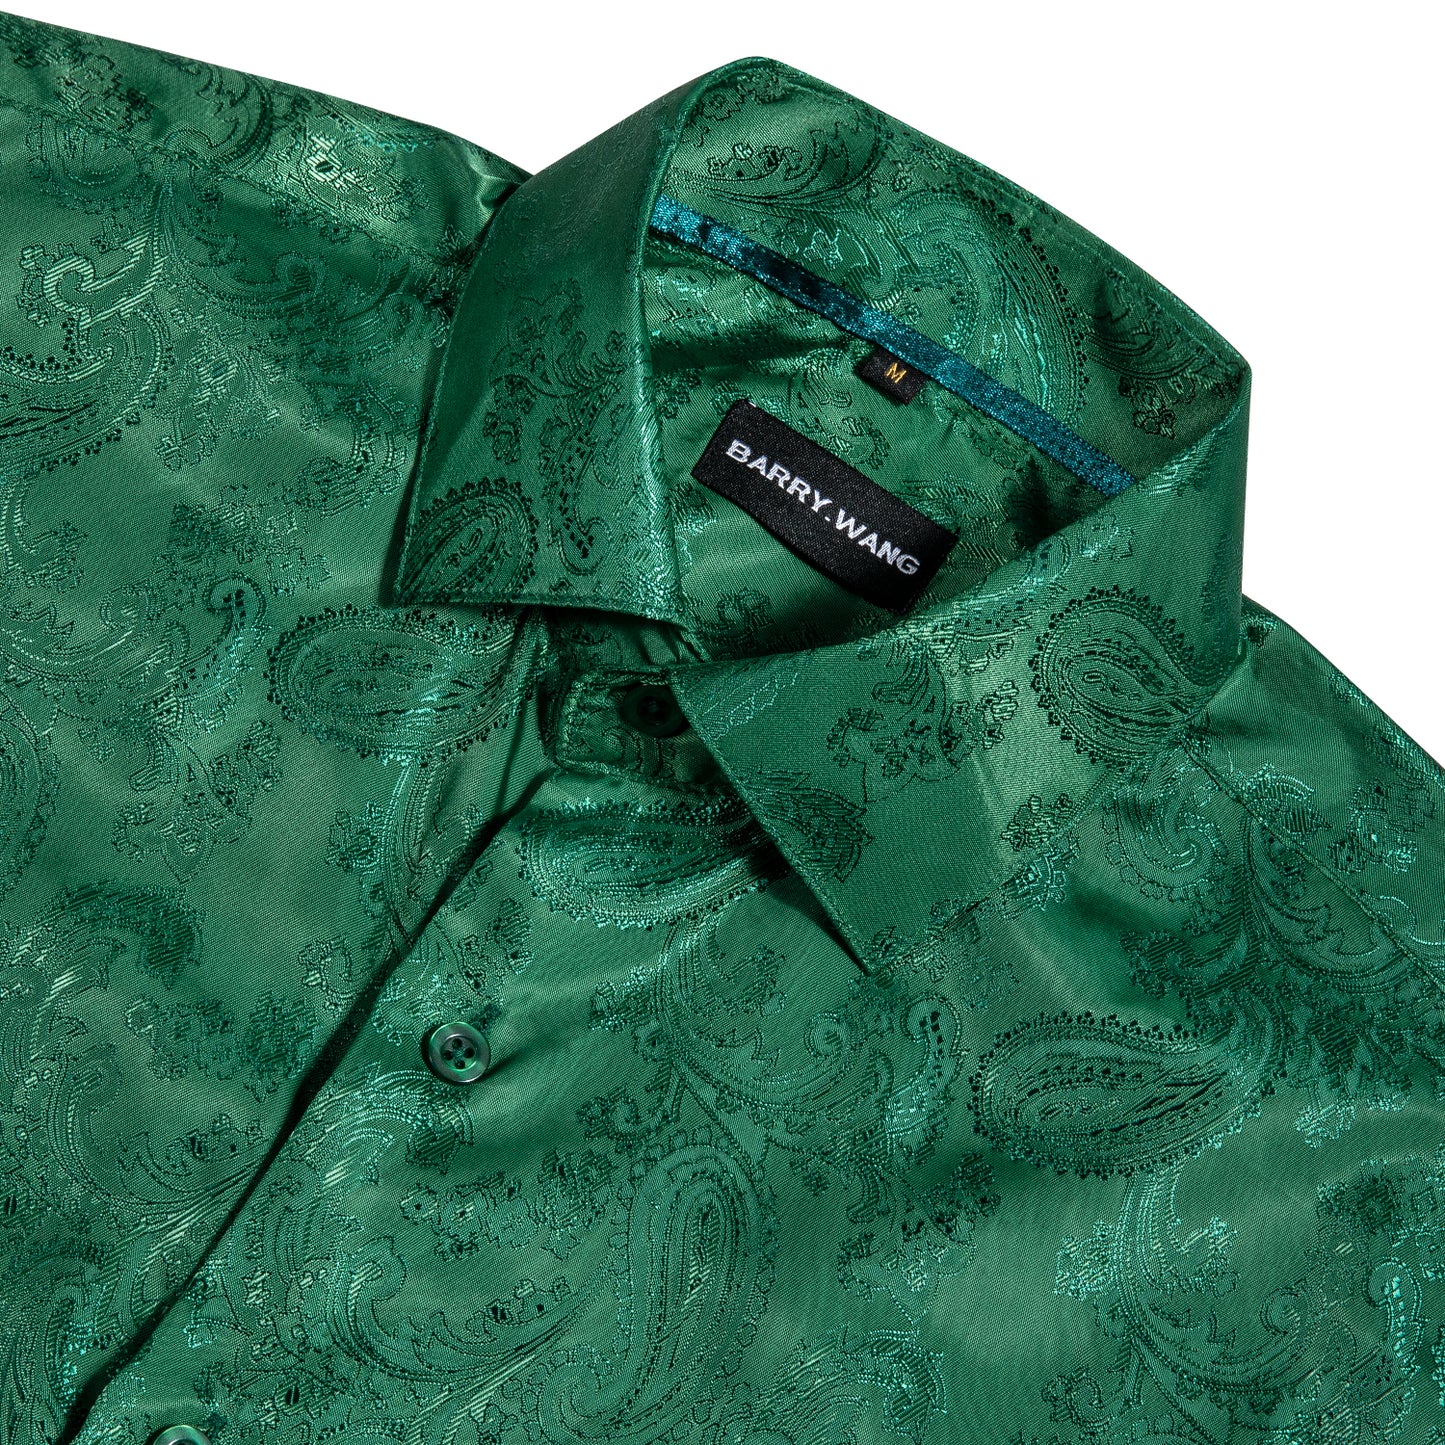 Novelty Silky Shirt - Green Paisley